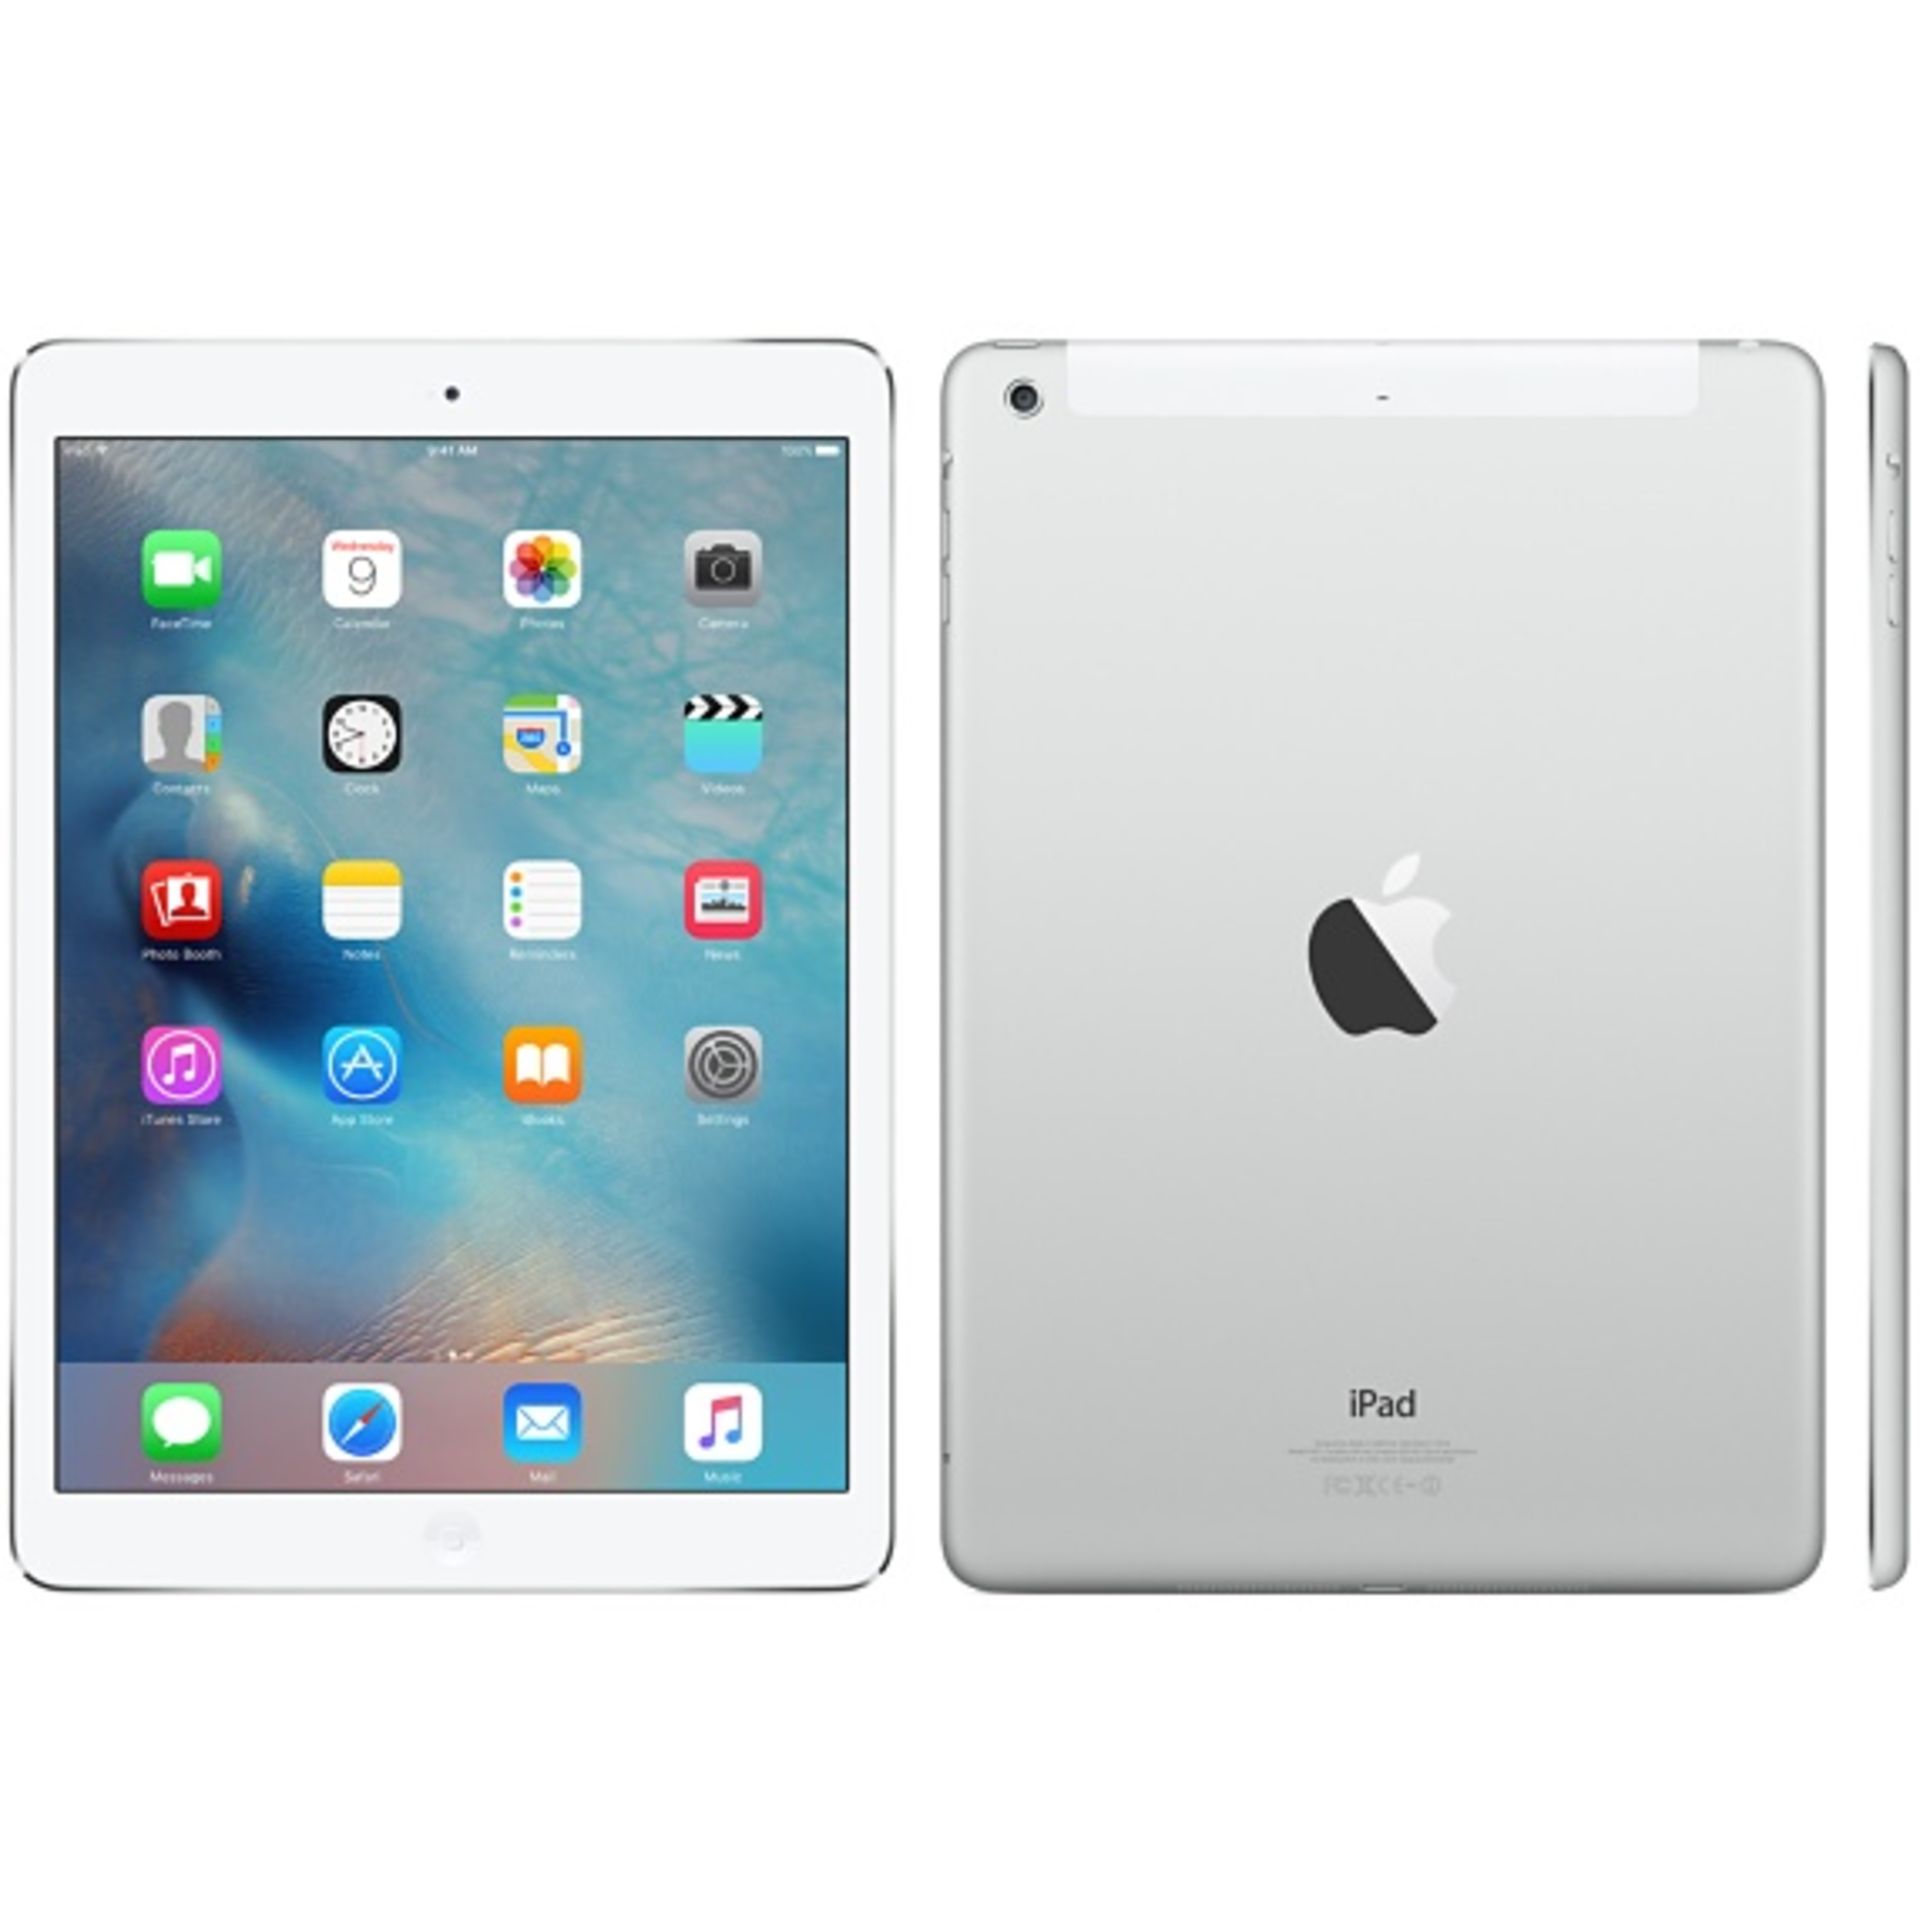 V Grade A/B Apple iPad Air 16GB with 4G and Wi-Fi - Silver/White - Generic Box - Image 2 of 2